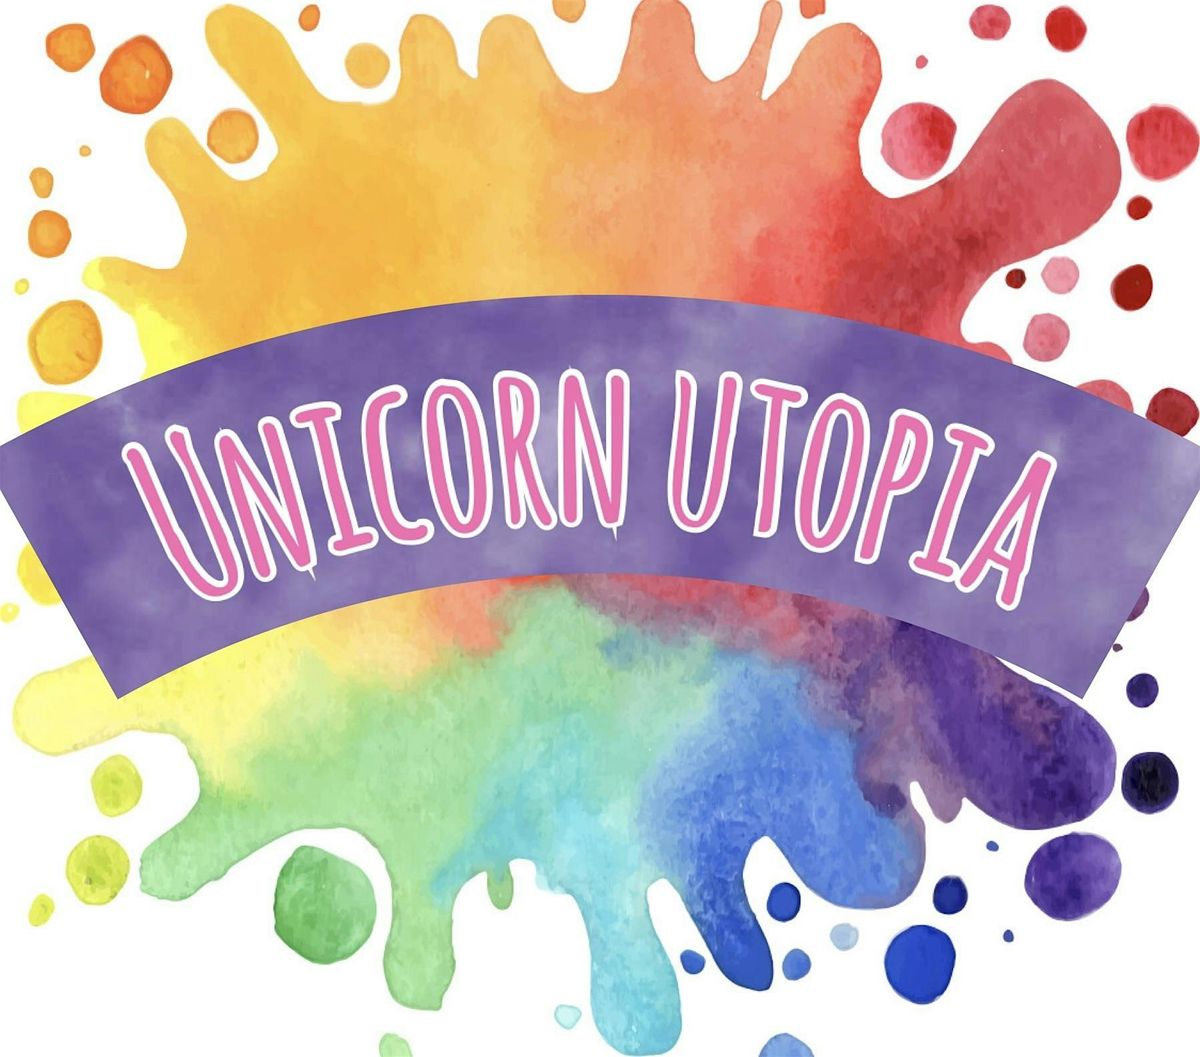 Unicorn Utopia